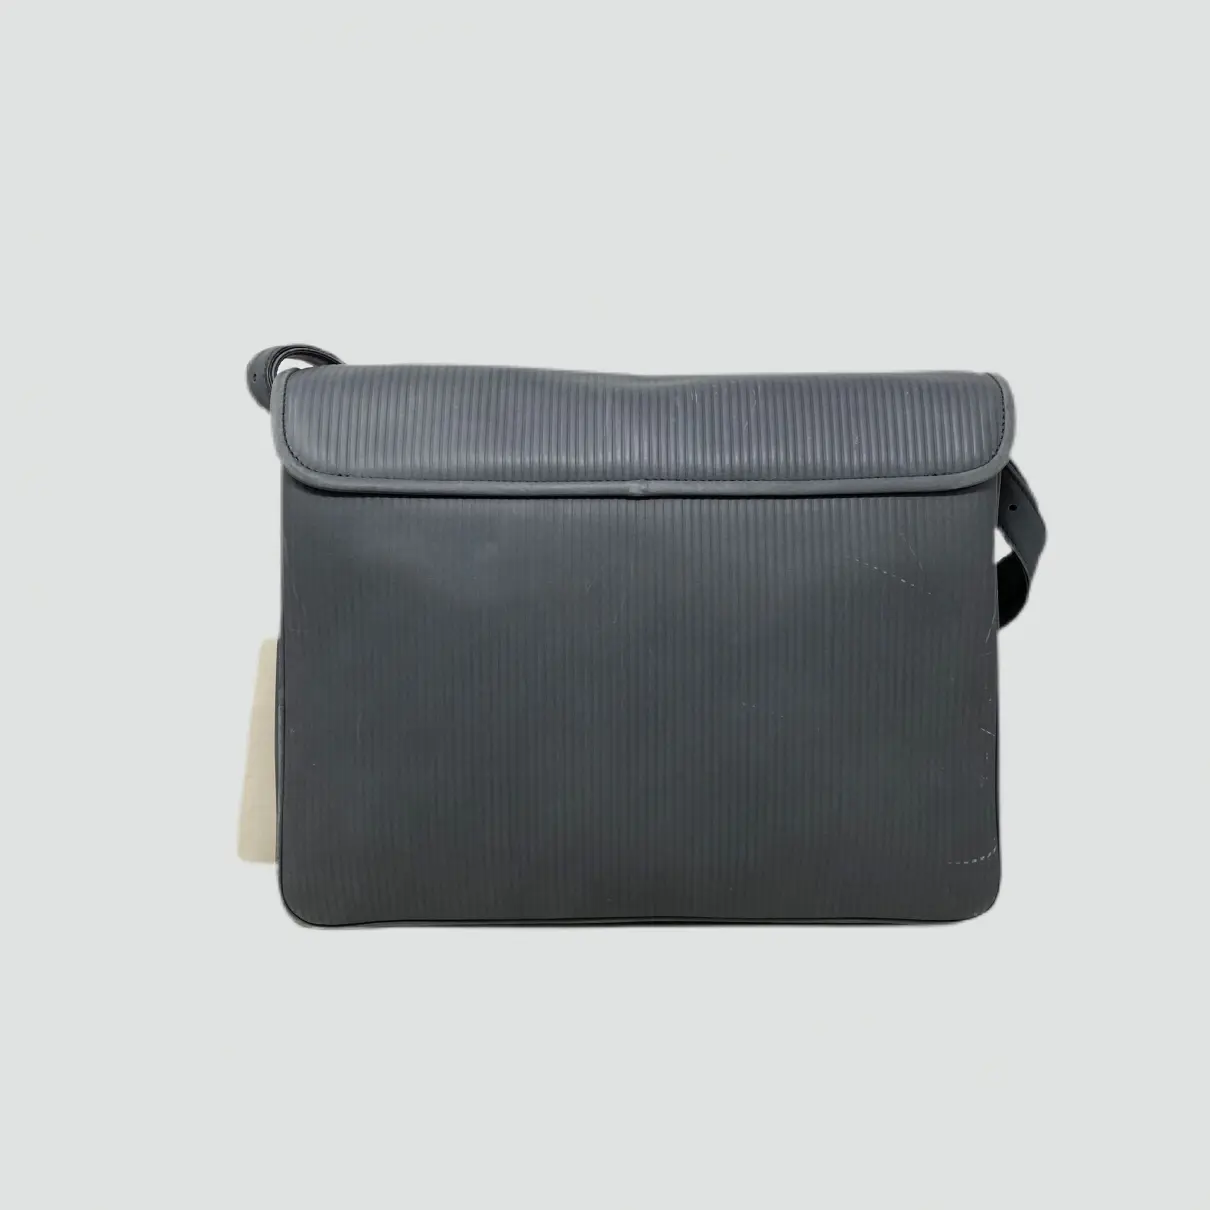 Buy Giorgio Armani Leather crossbody bag online